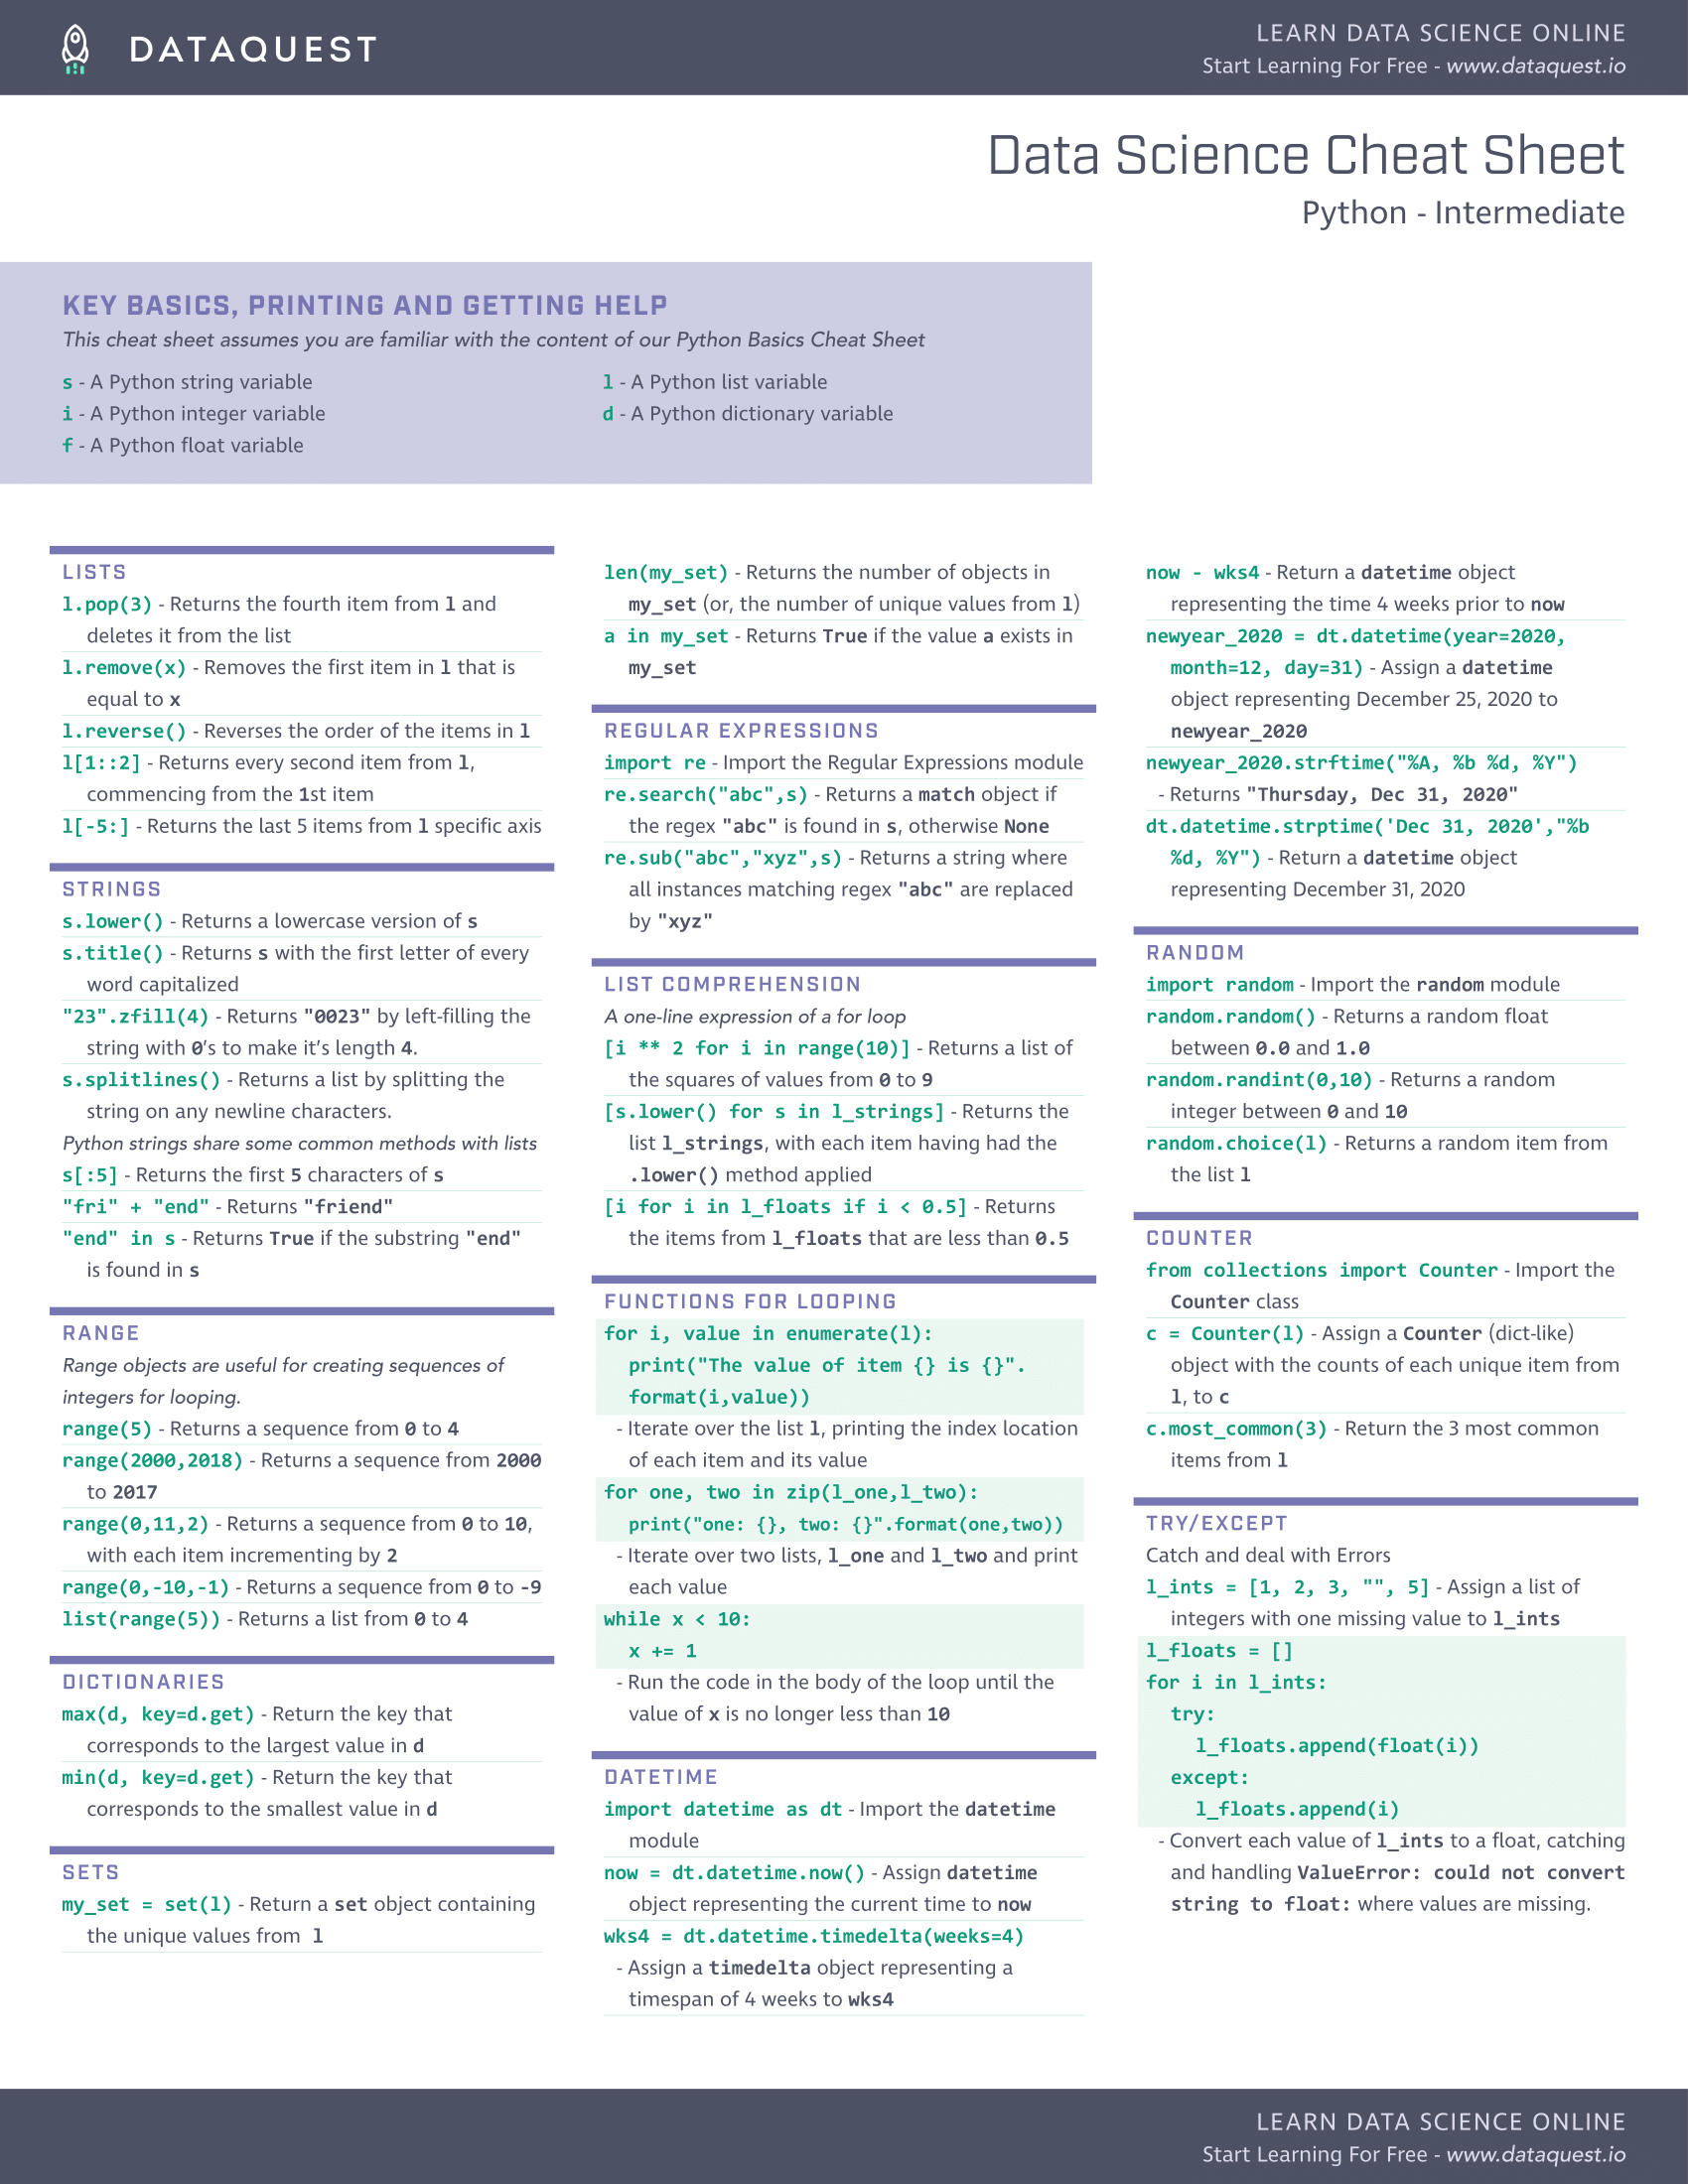 Intermediate-Python-Cheat-Sheet-1.png